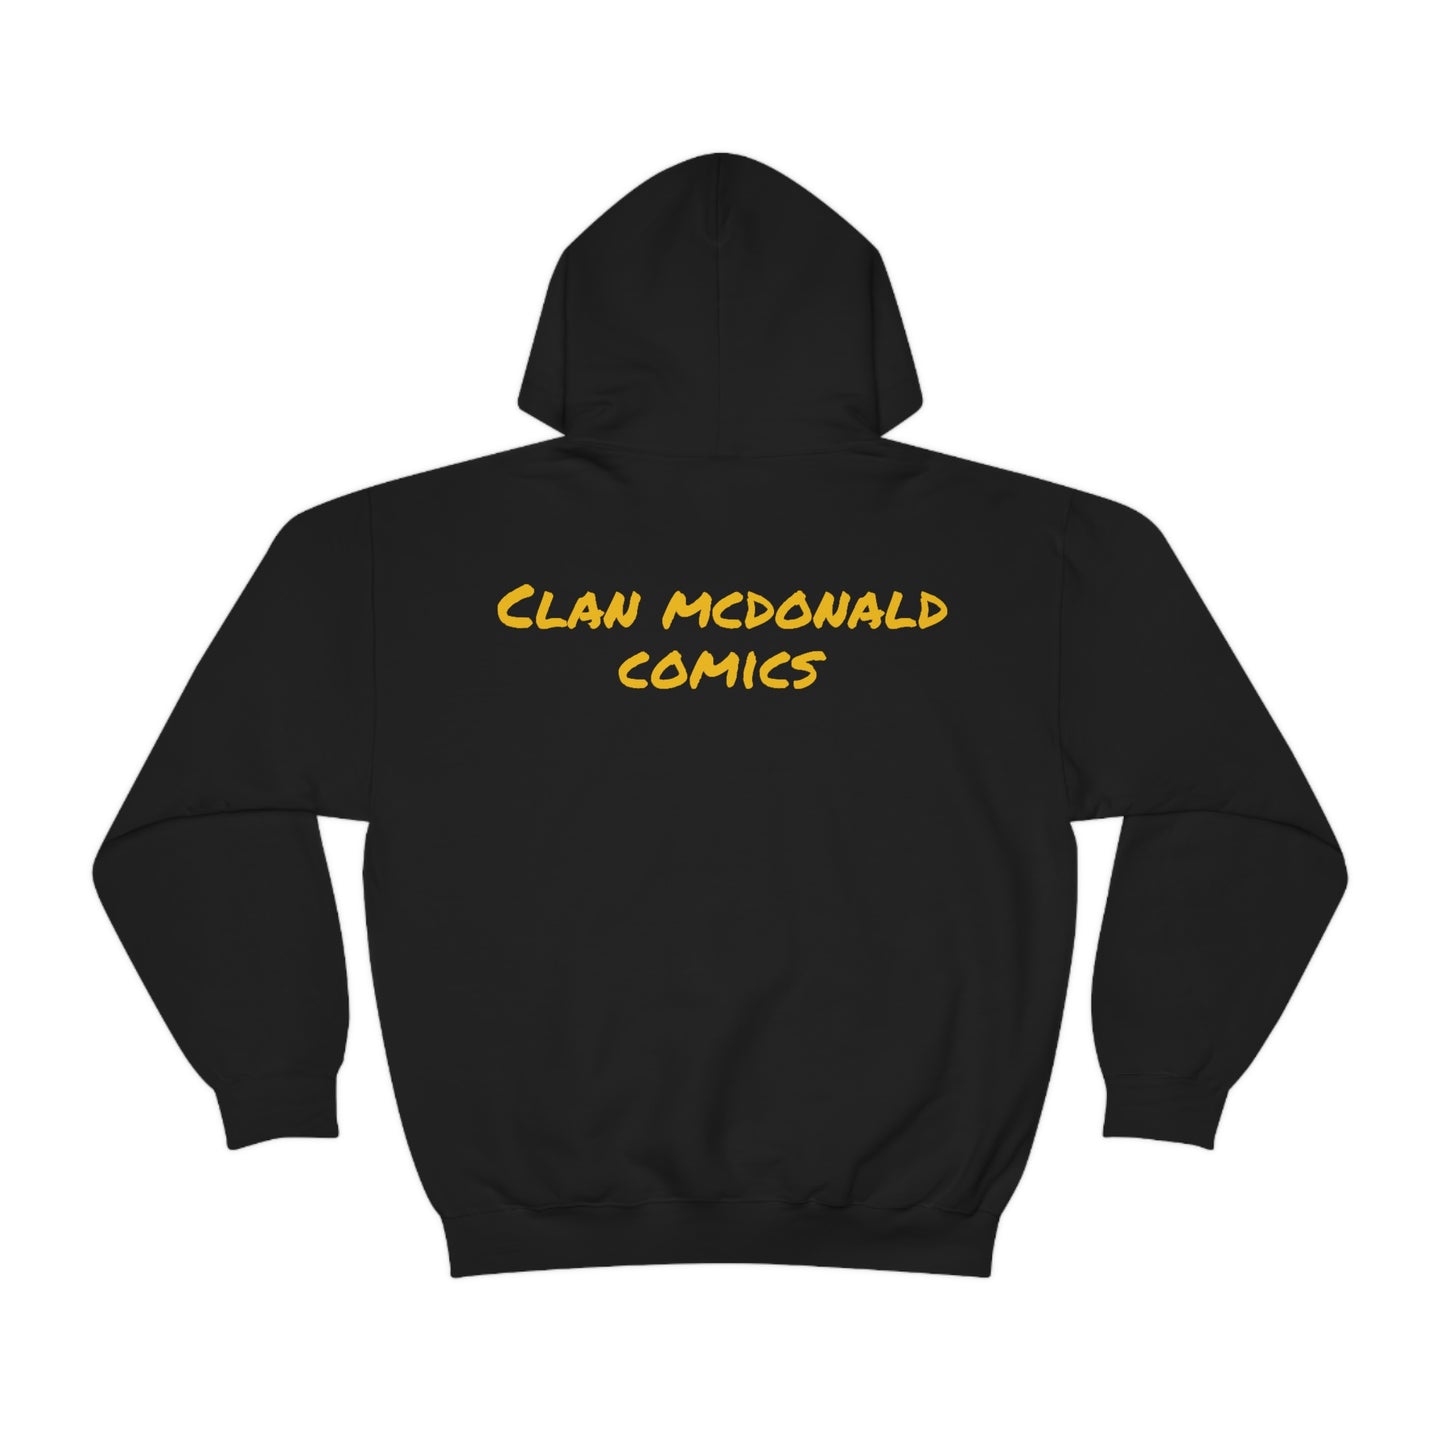 Clan McDonald Comics Hooded Sweatshirt